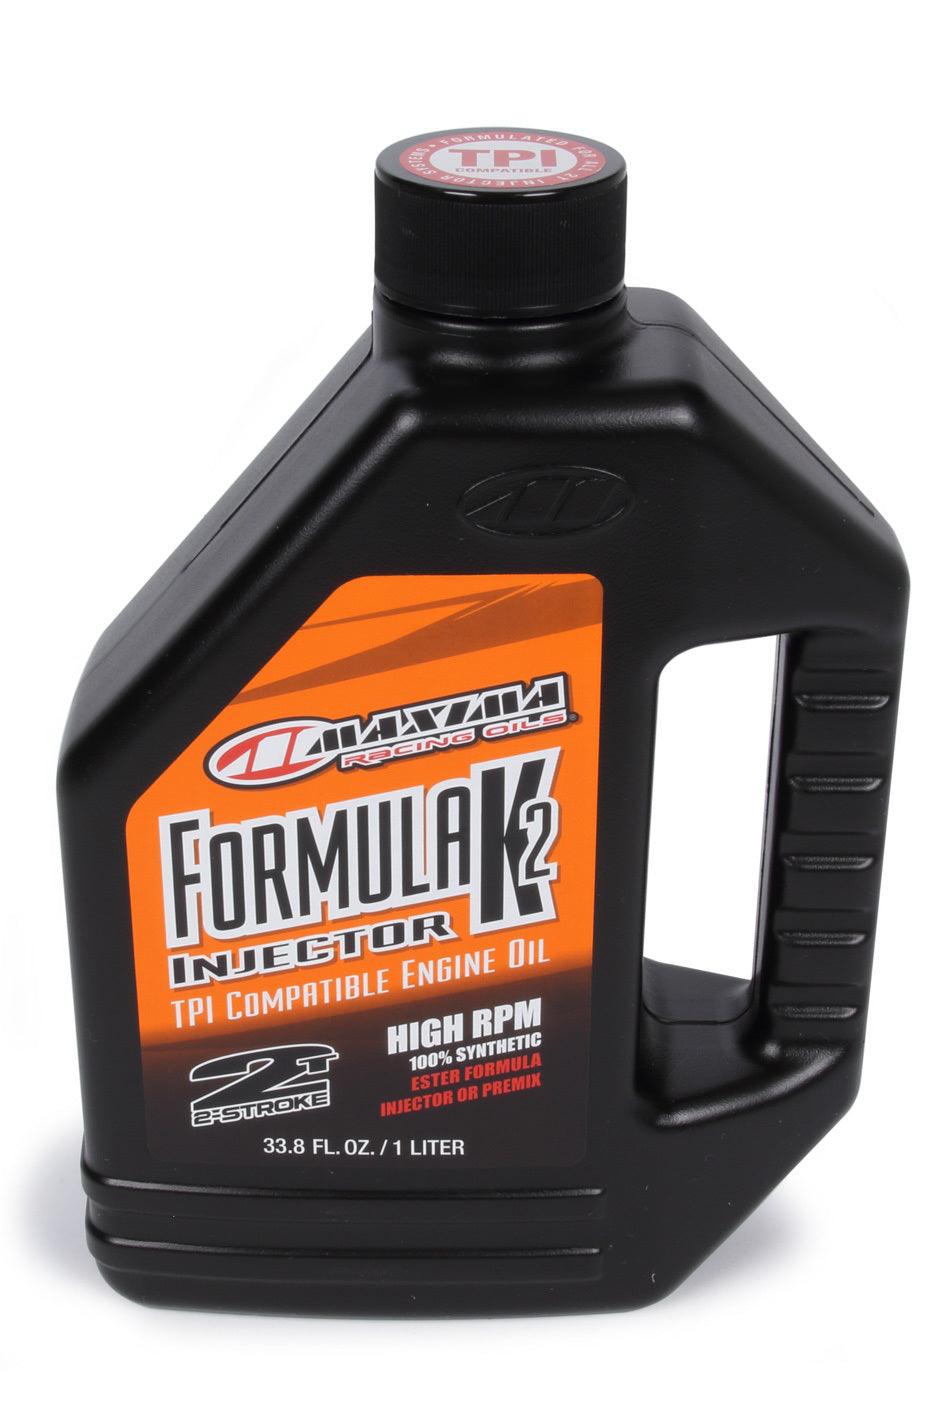 Formula K2 Injector 2-St roke Oil 1 Liter - Burlile Performance Products